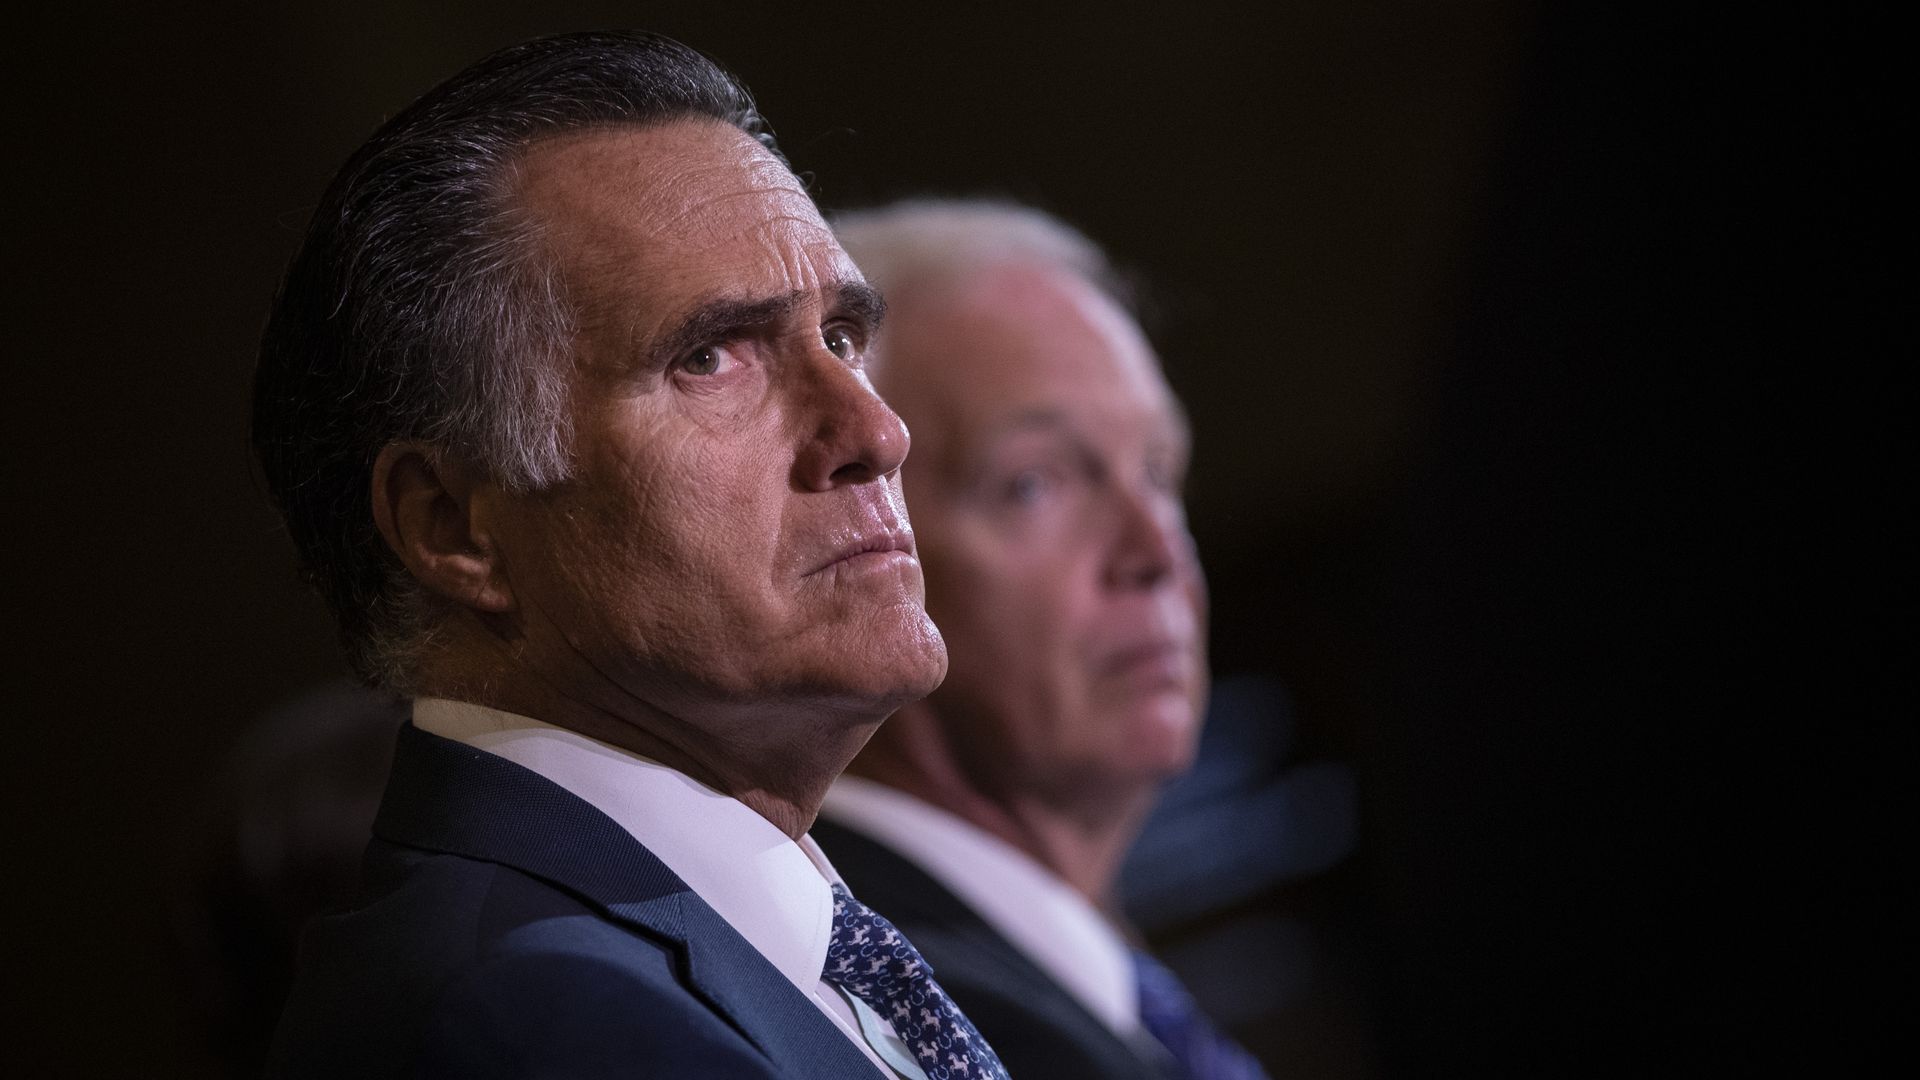 Mitt Romney questions Trump amid whistleblower complaint - Axios1920 x 1080